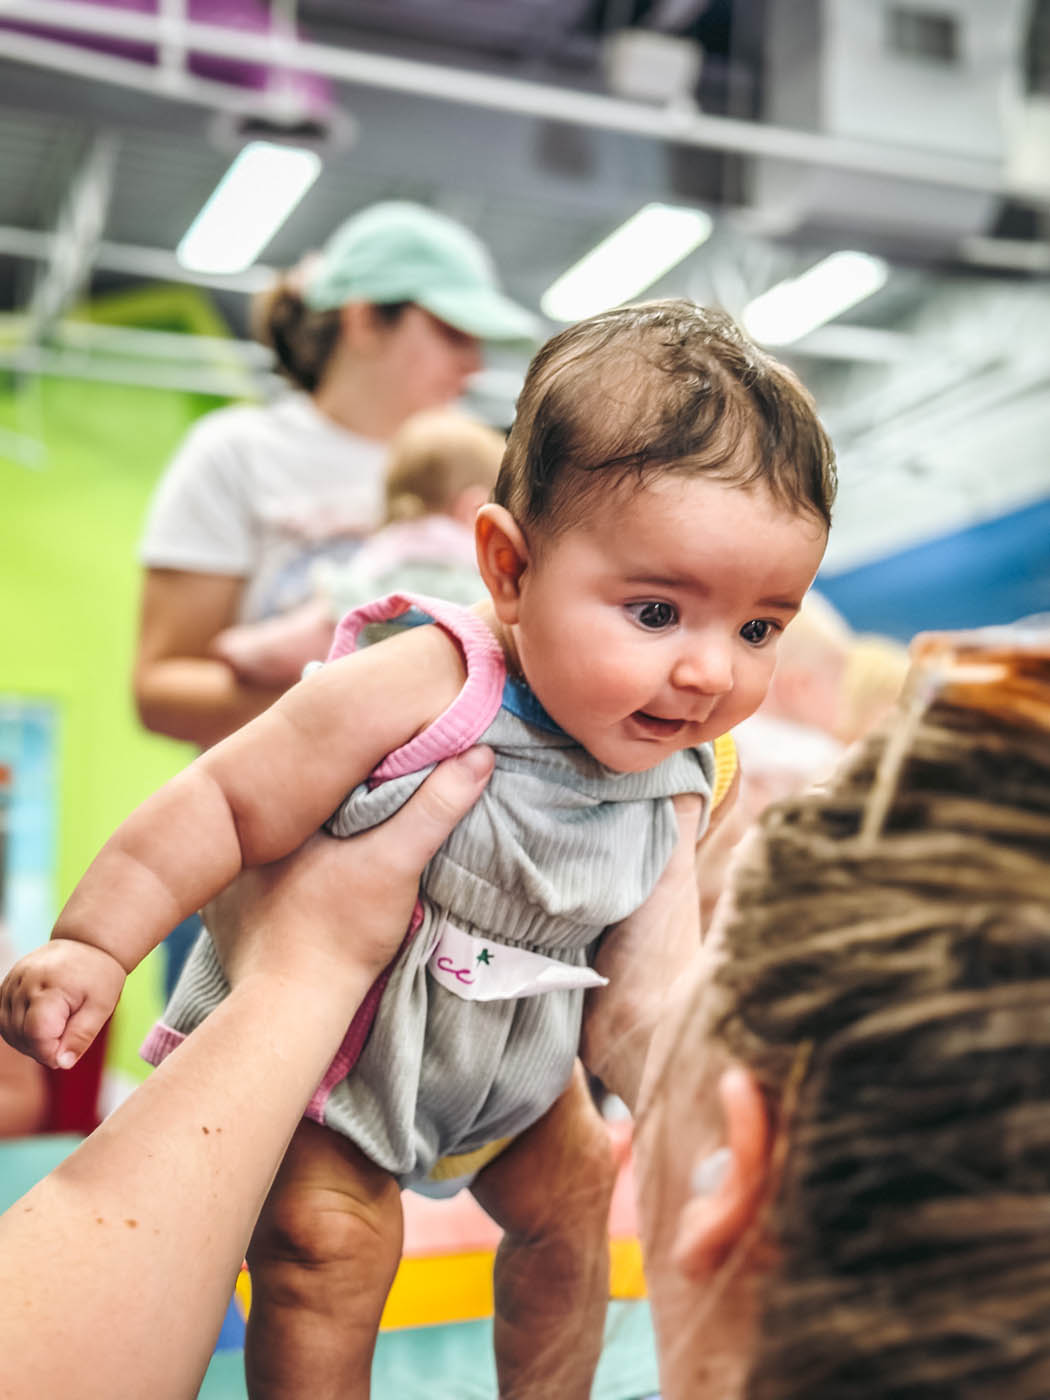 A baby being held in the air at Romp n' Roll St. Petersburg's classes for babies in St. Petersburg, FL